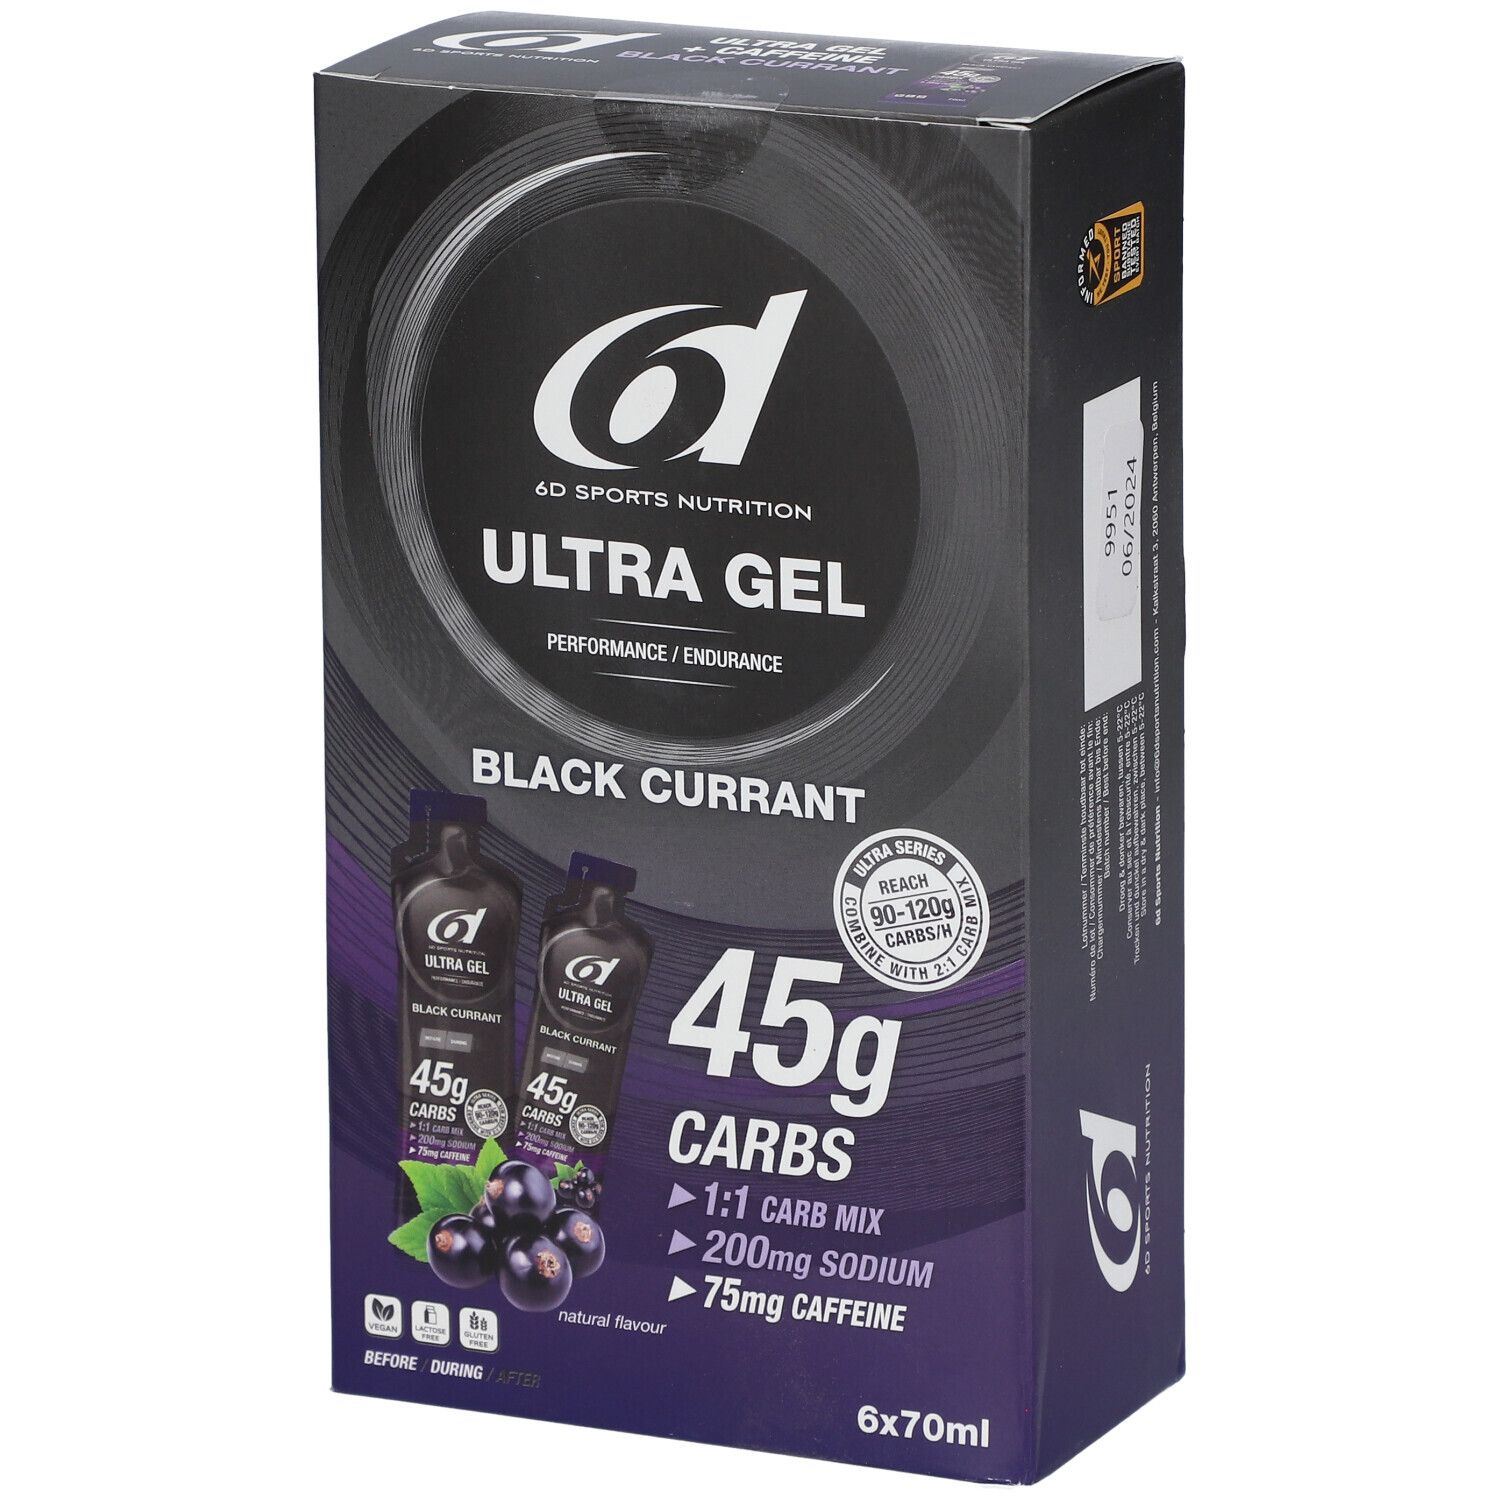 6D Sports Nutrition Ultra Gel Black Currant